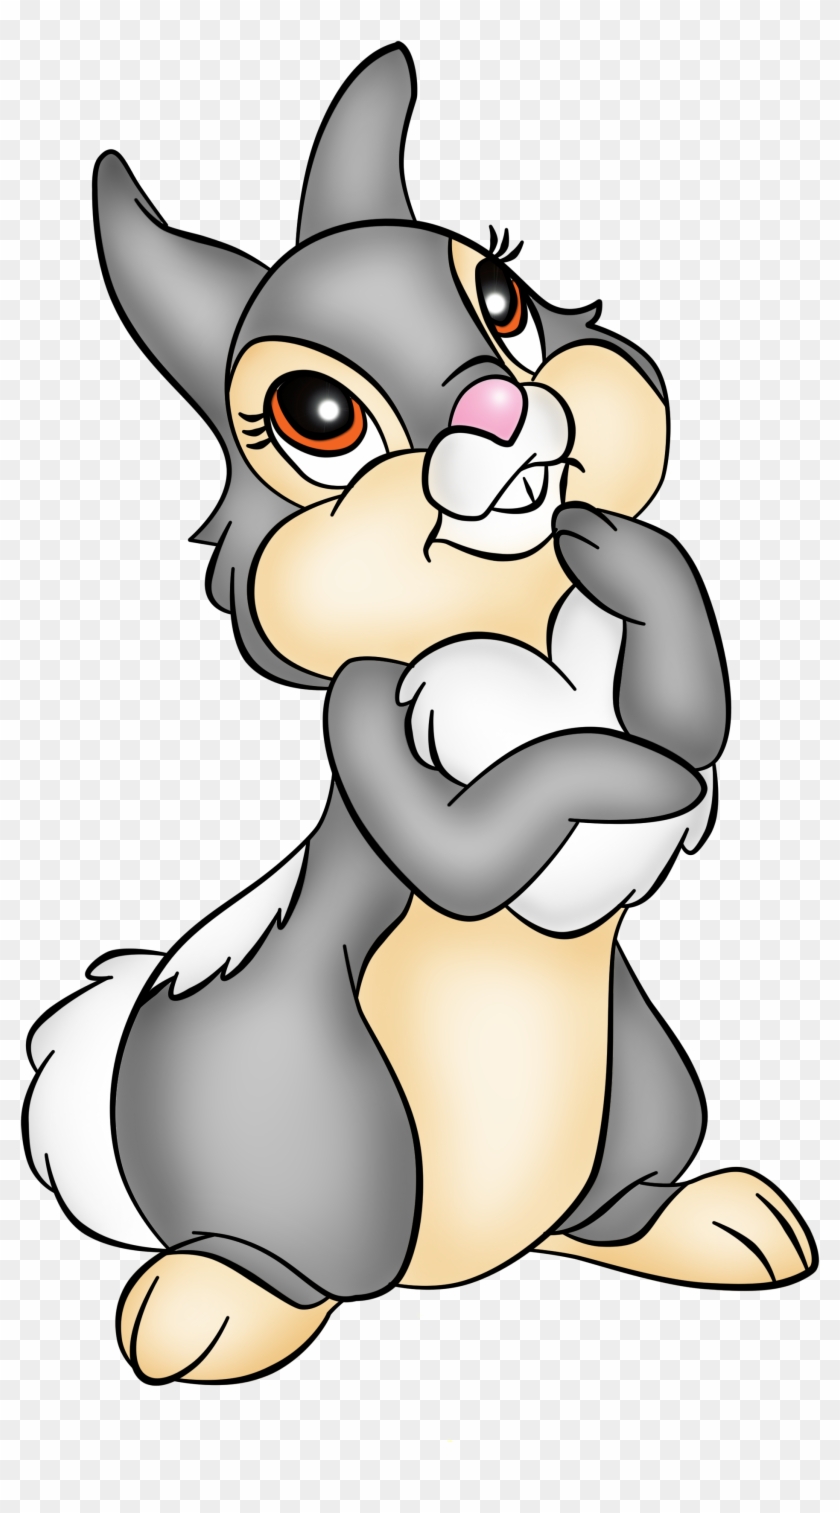 Thumper Youtube Clip Art - Thumper Cartoon Character #469438